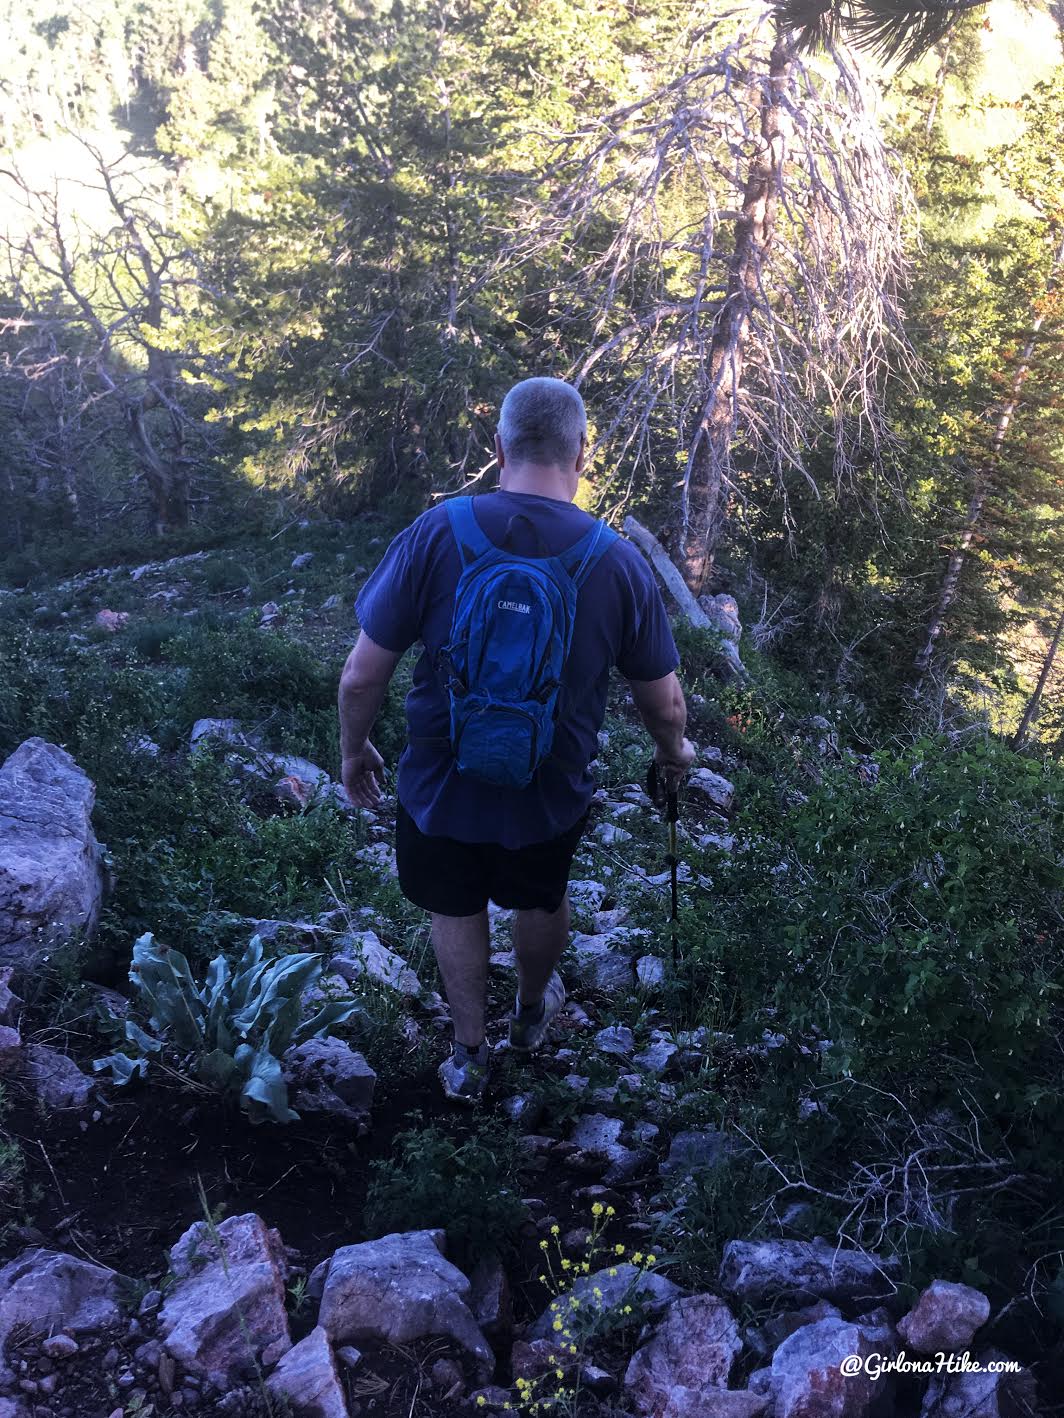 Hiking to Mine Camp Peak, Millard County High Point, Utah county high points